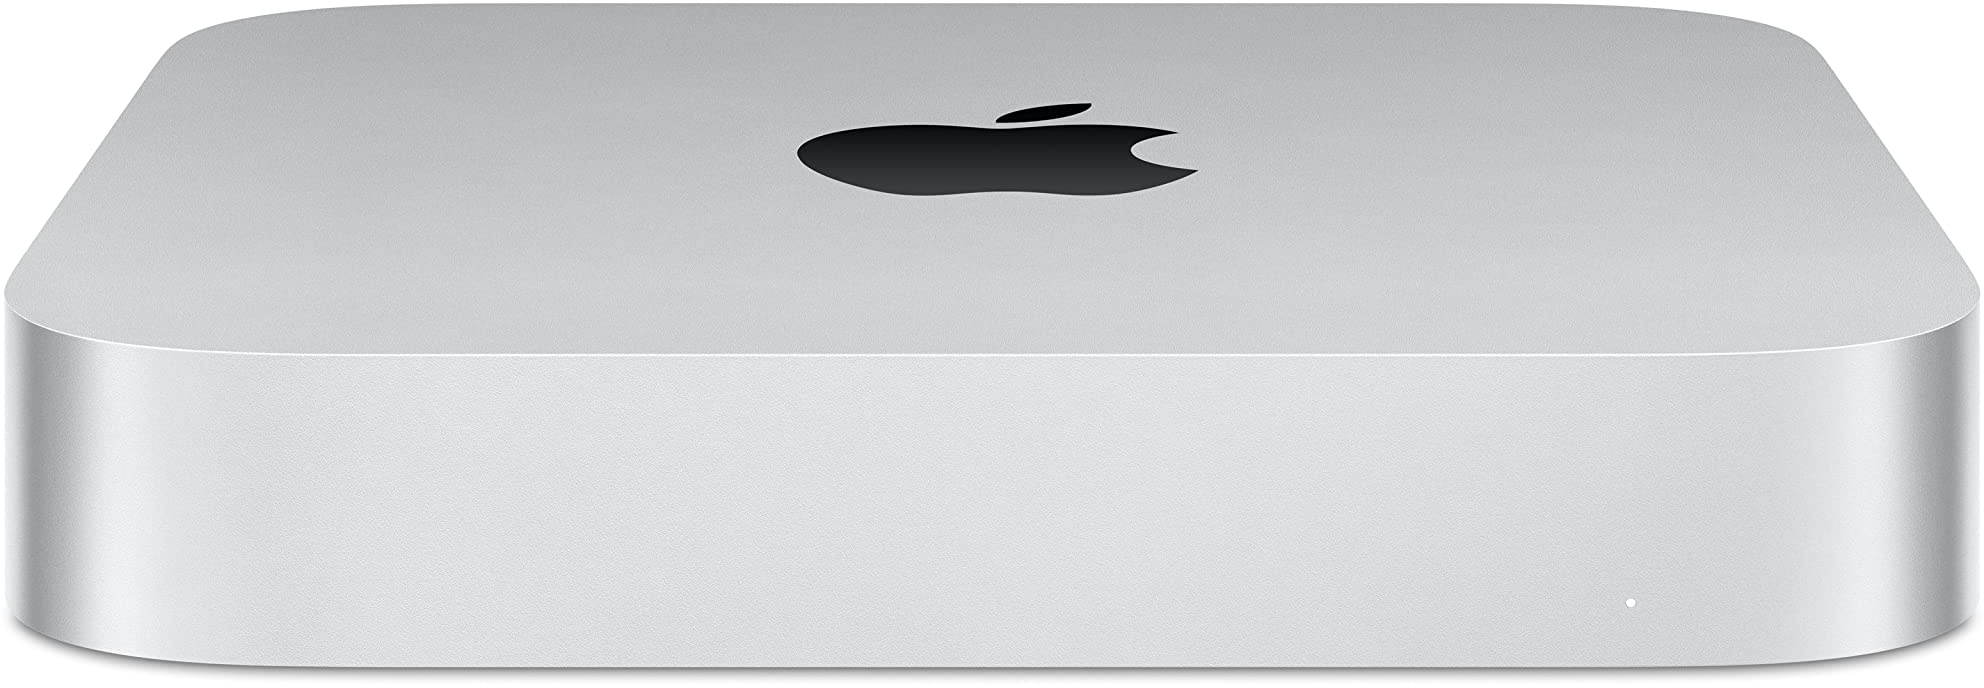 Apple 2023 Mac Mini Desktopcomputer mit M2 Chip, 8 GB RAM, 512 GB SSD Speicher, Gigabit Ethernet. Funktioniert mit iPhone/iPad